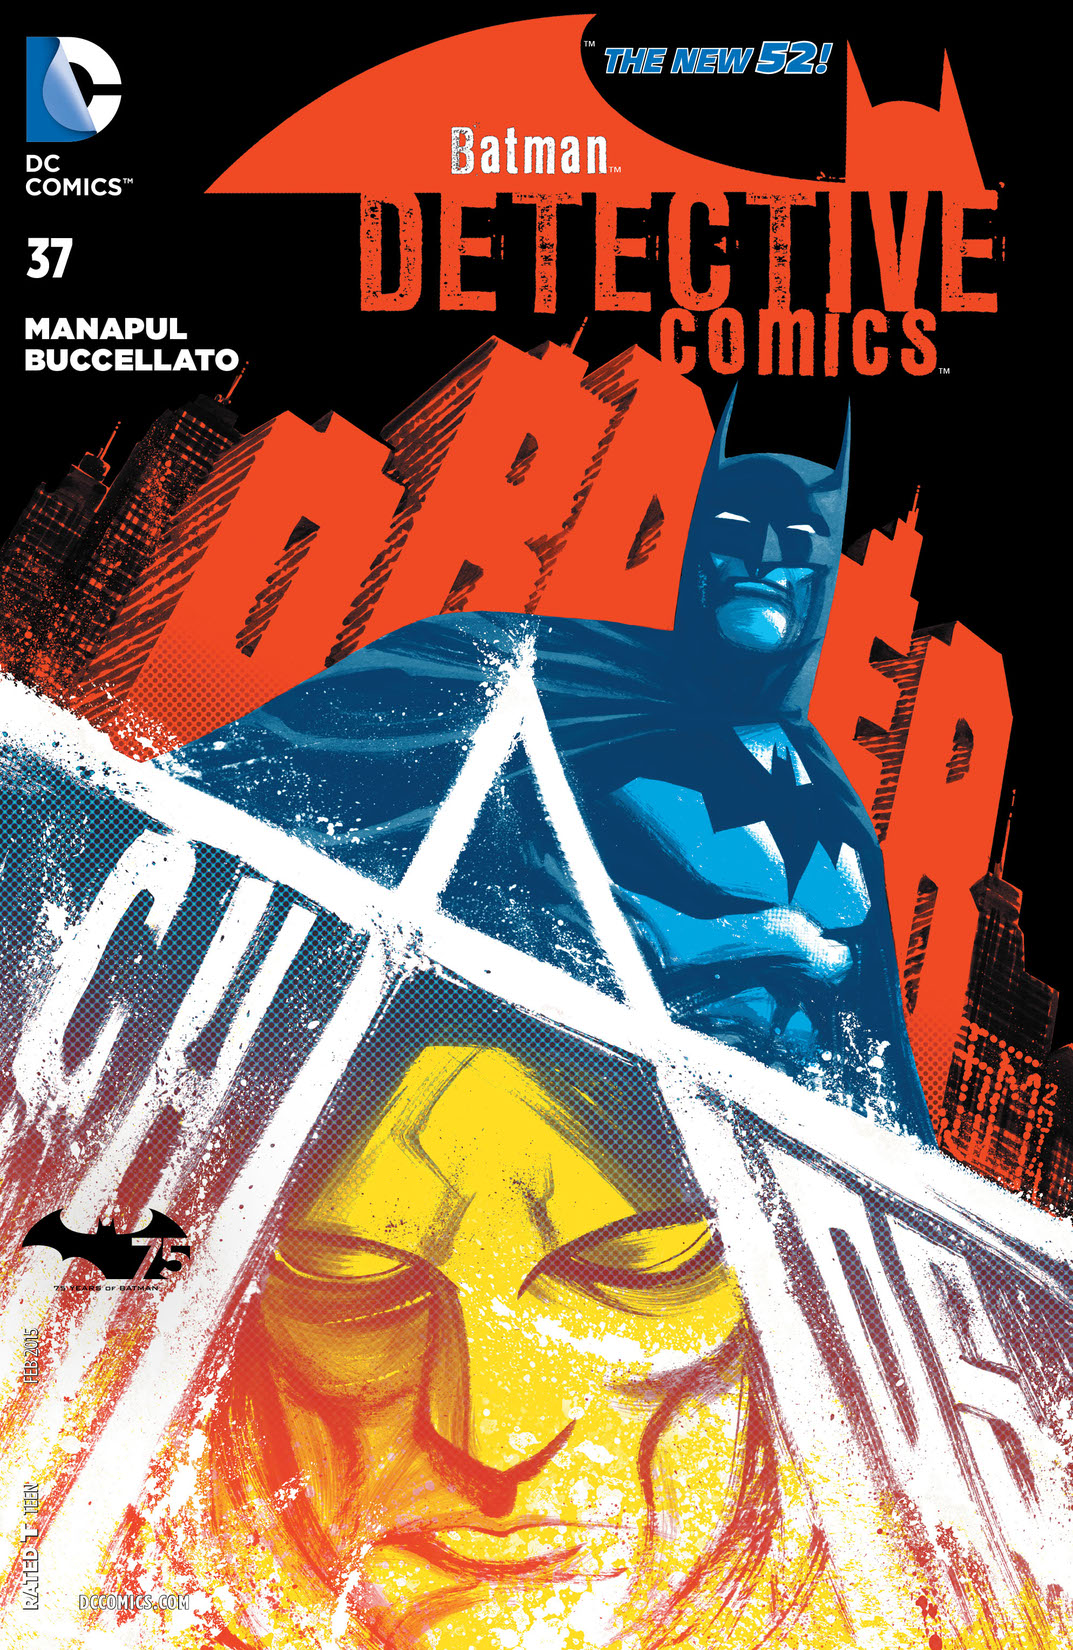 Detective Comics (2011-) #37 preview images